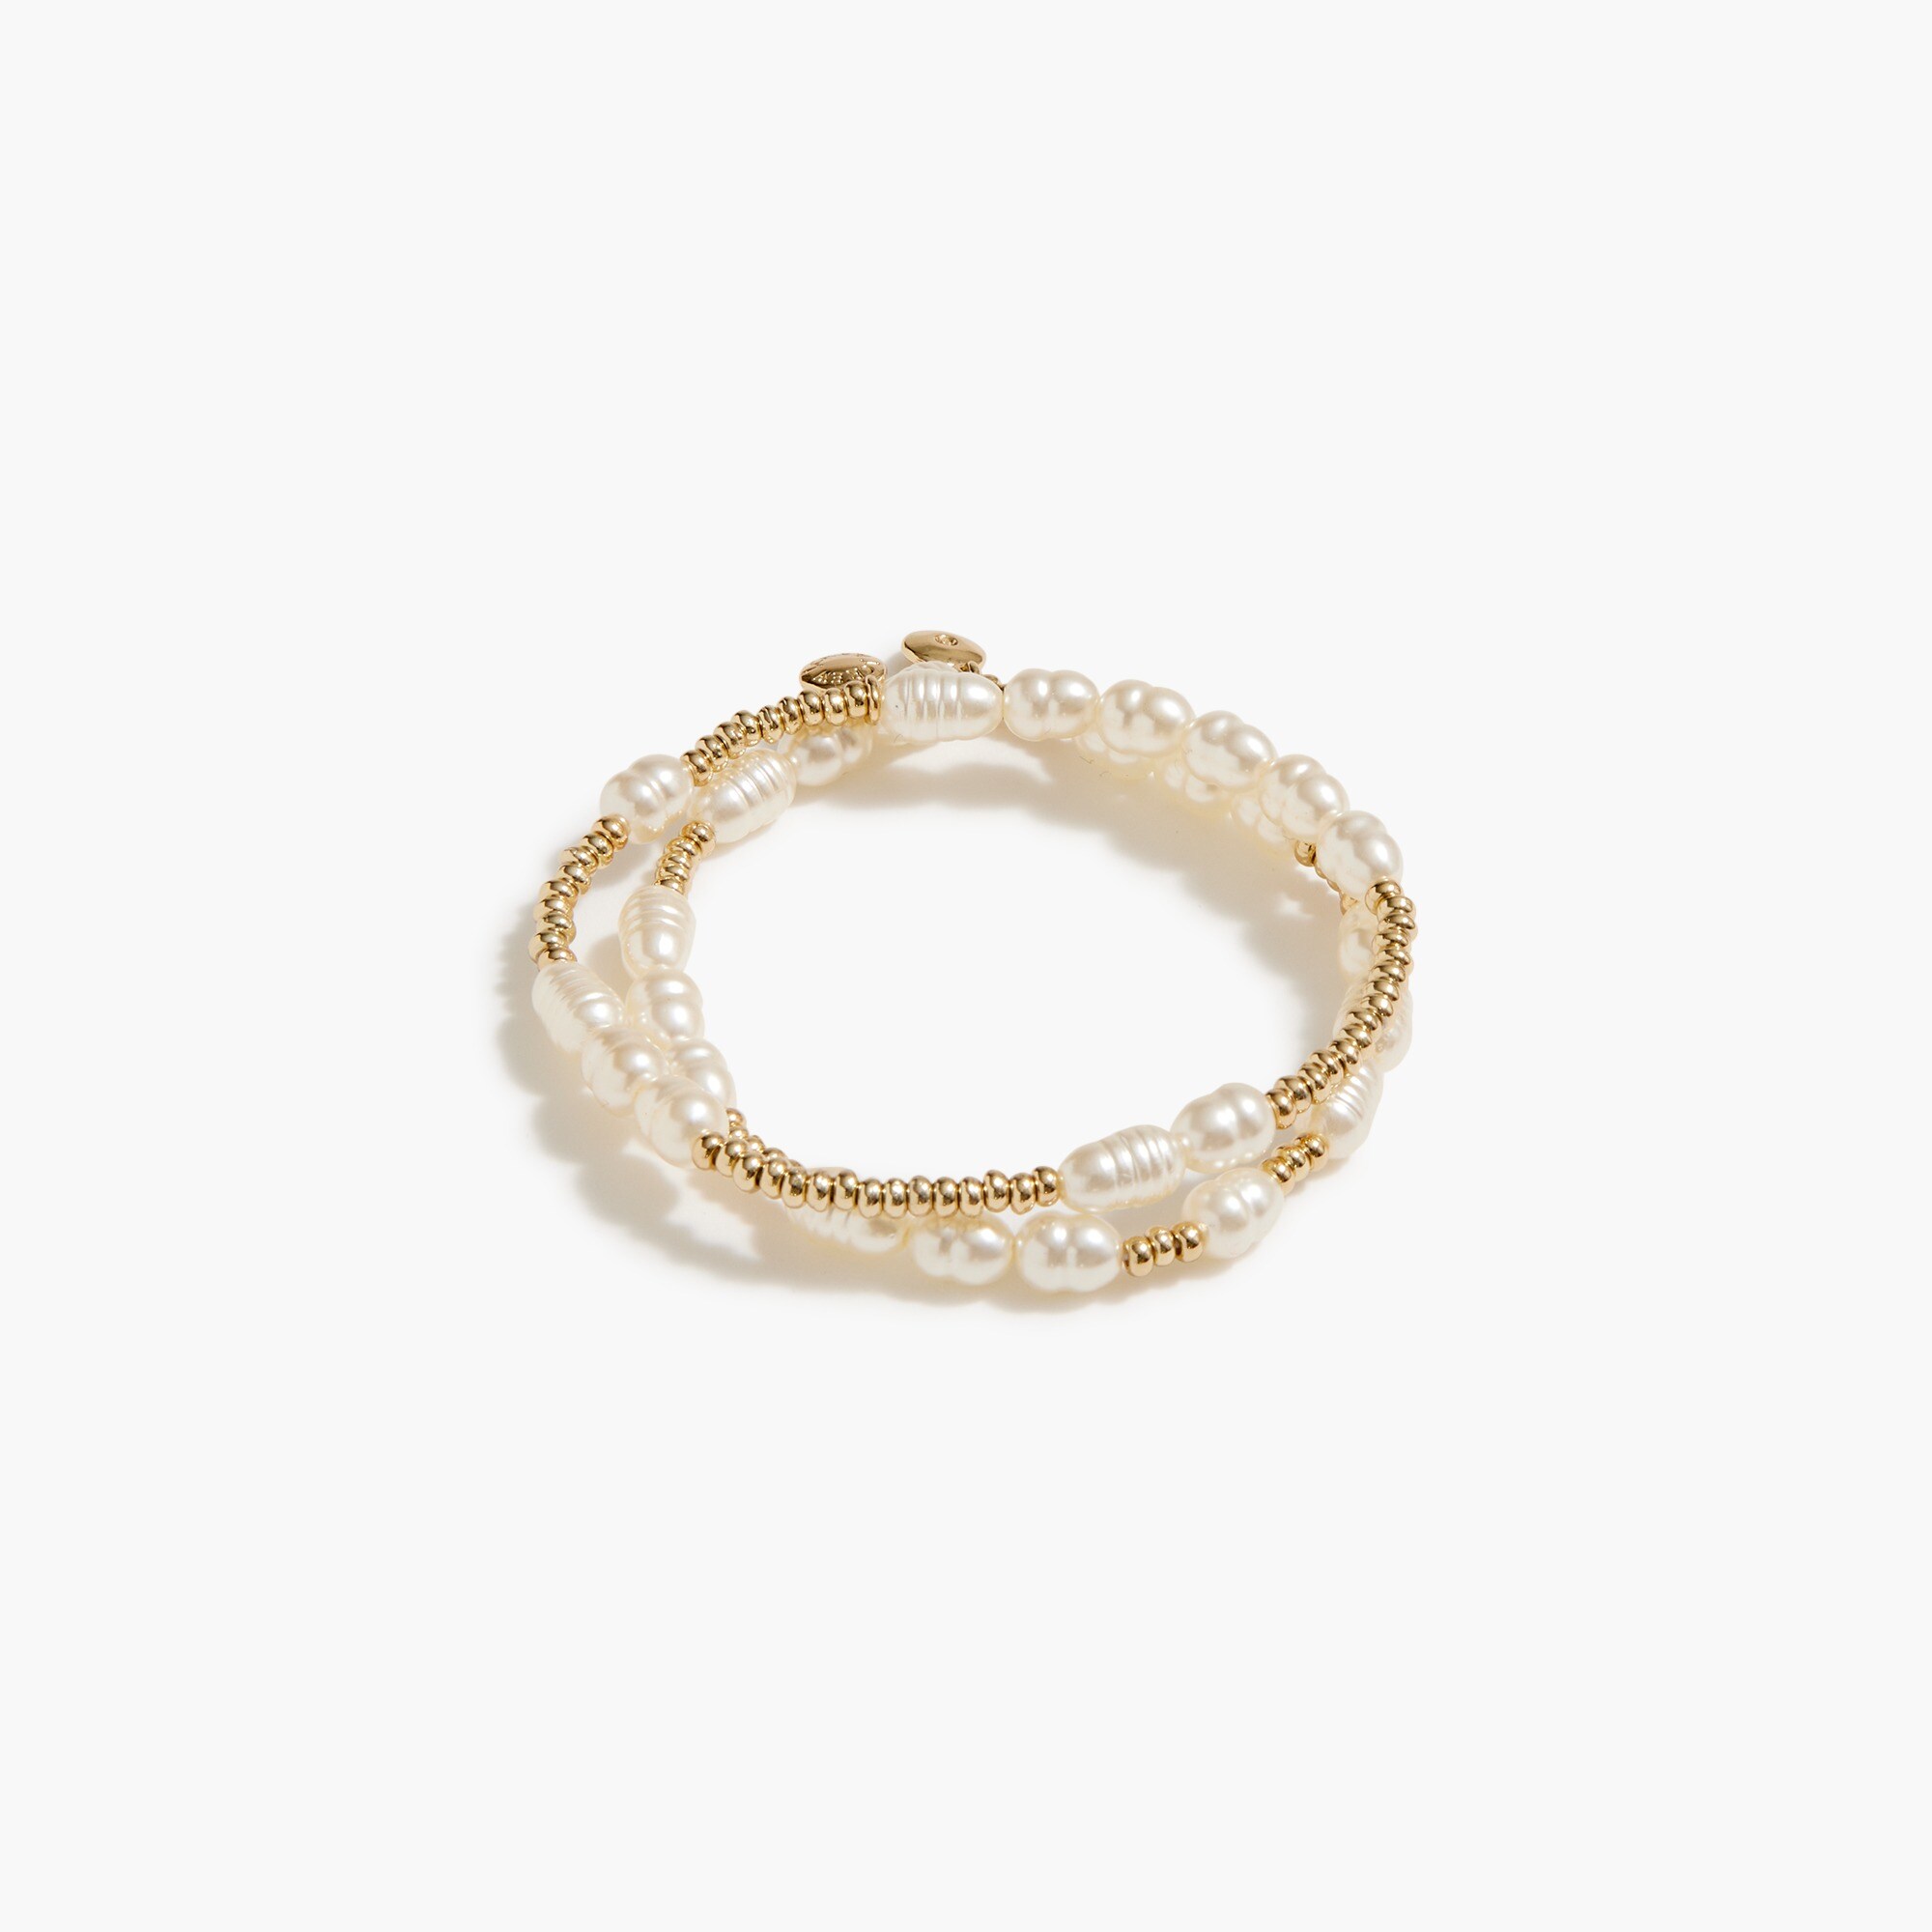  Pearl and bead bracelets set